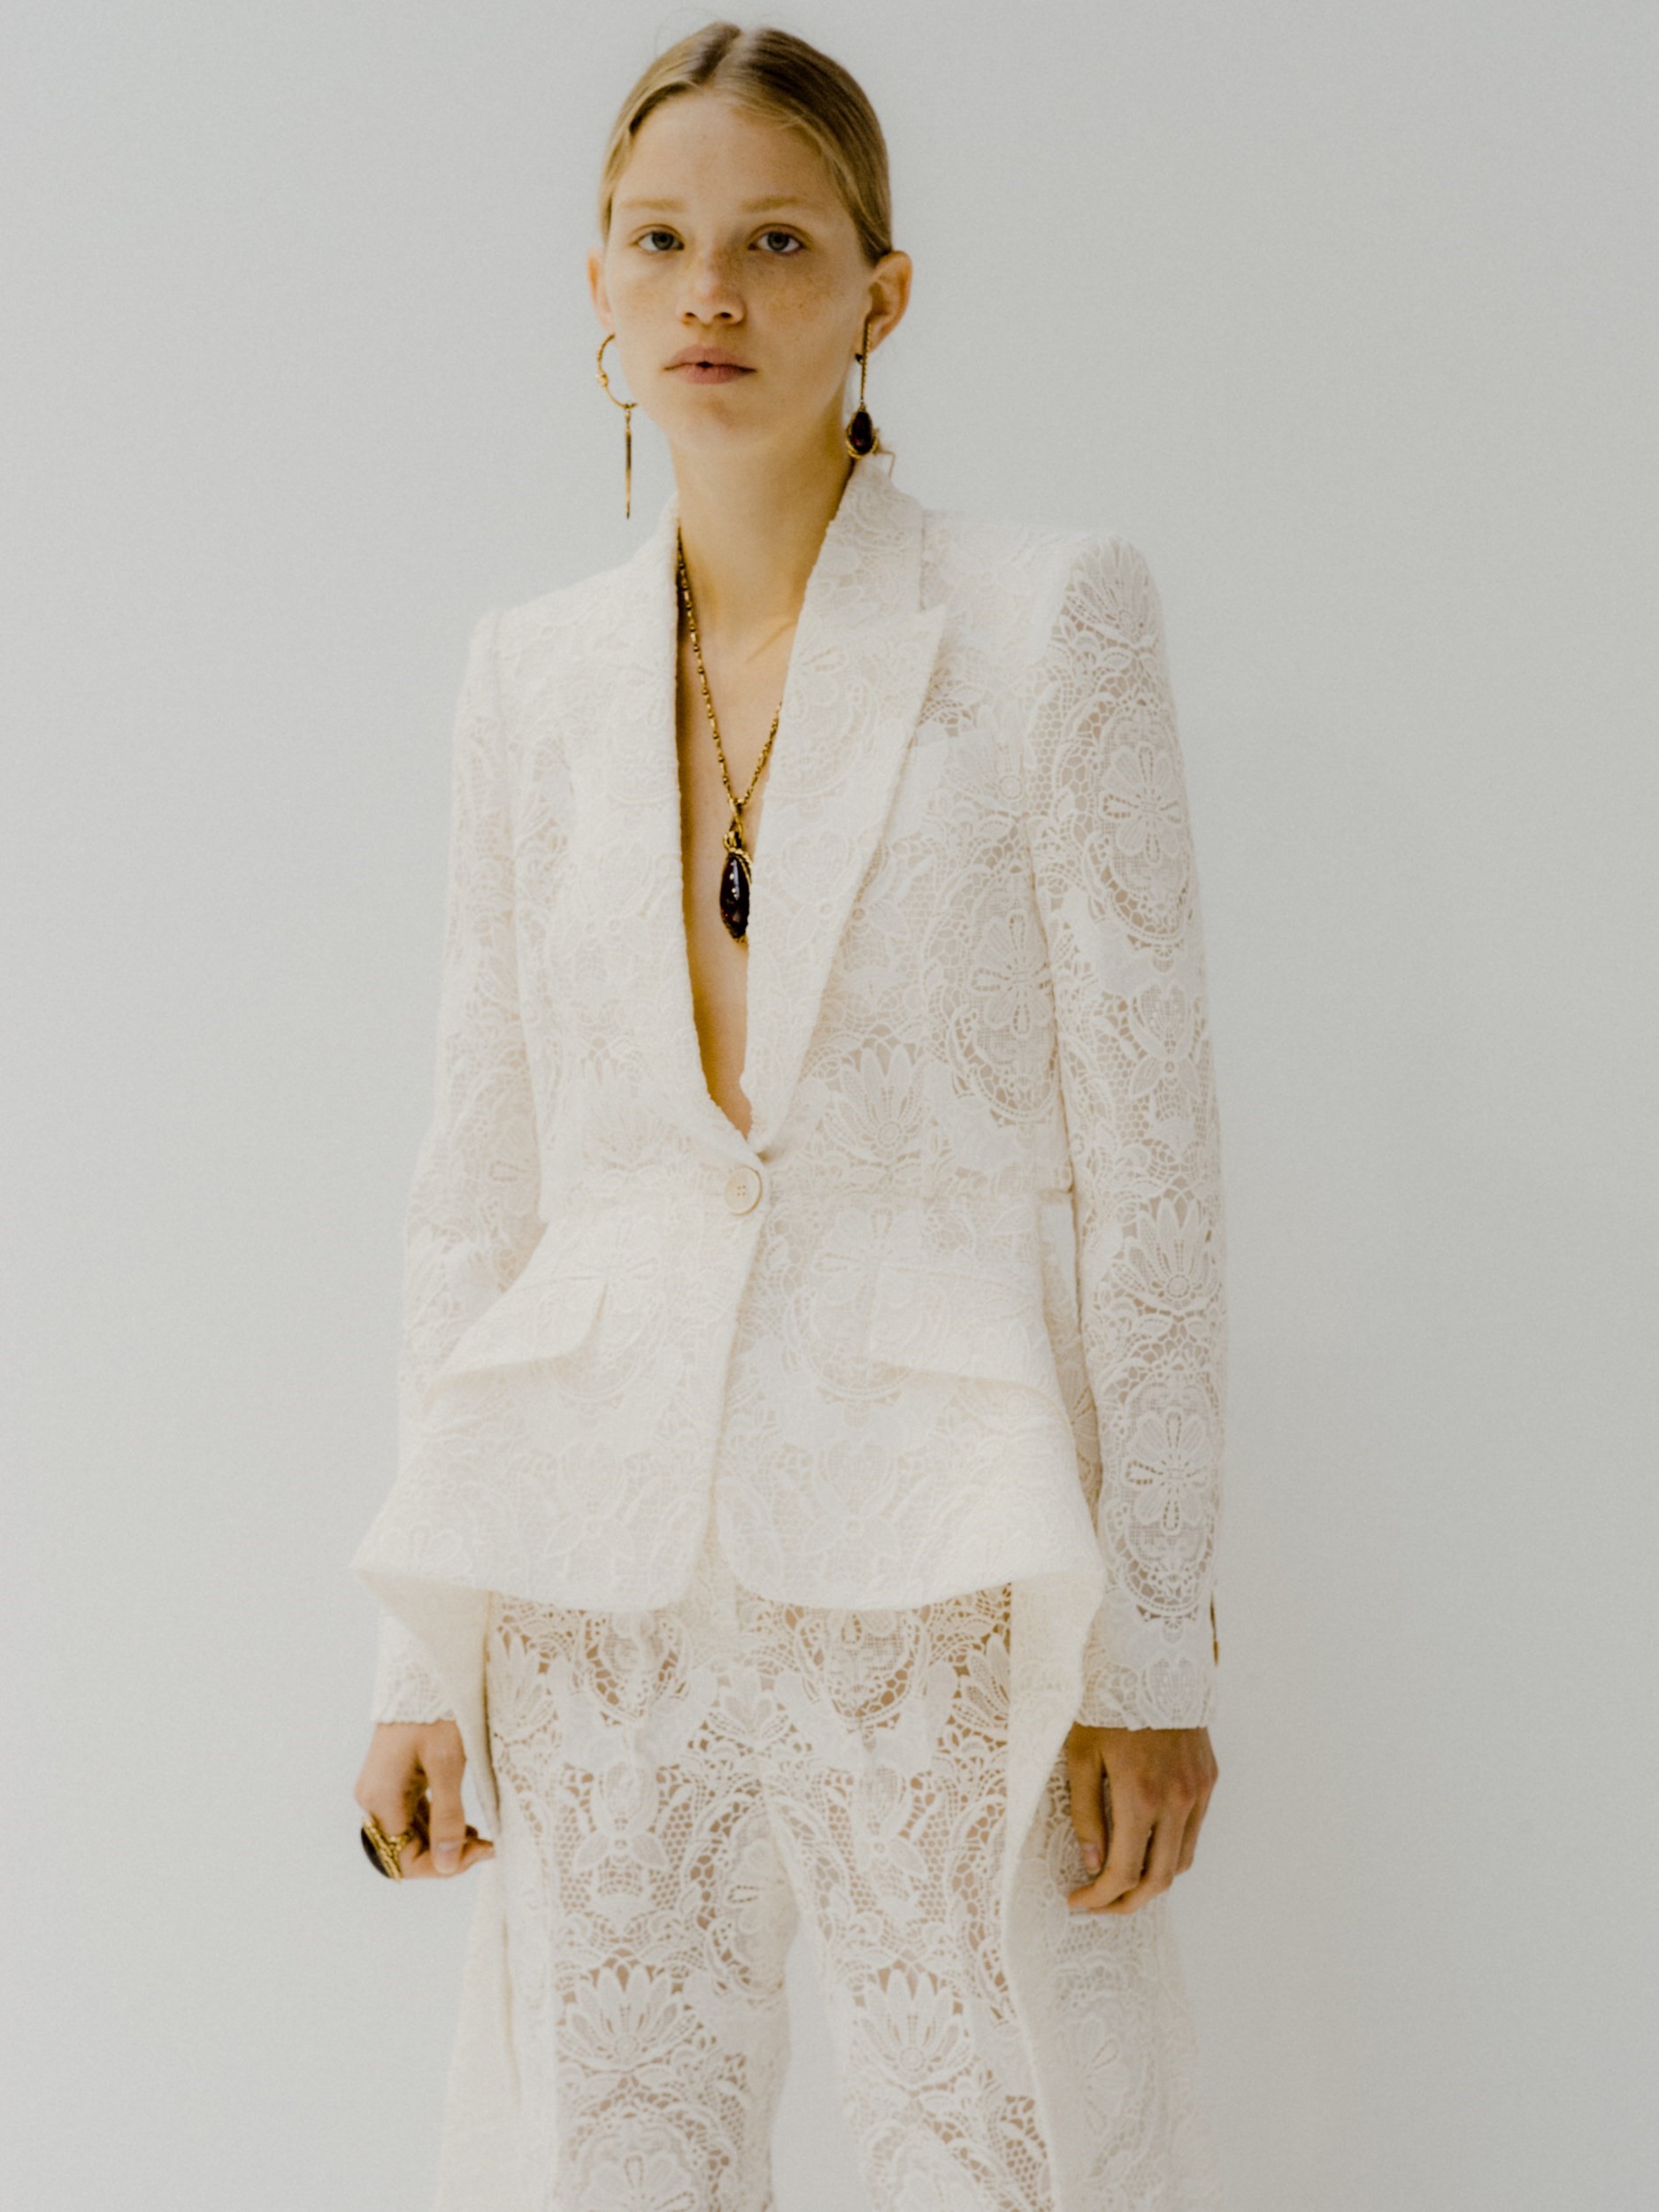 ASOS EDITION skinny tuxedo suit jacket in white lace | ASOS-nextbuild.com.vn